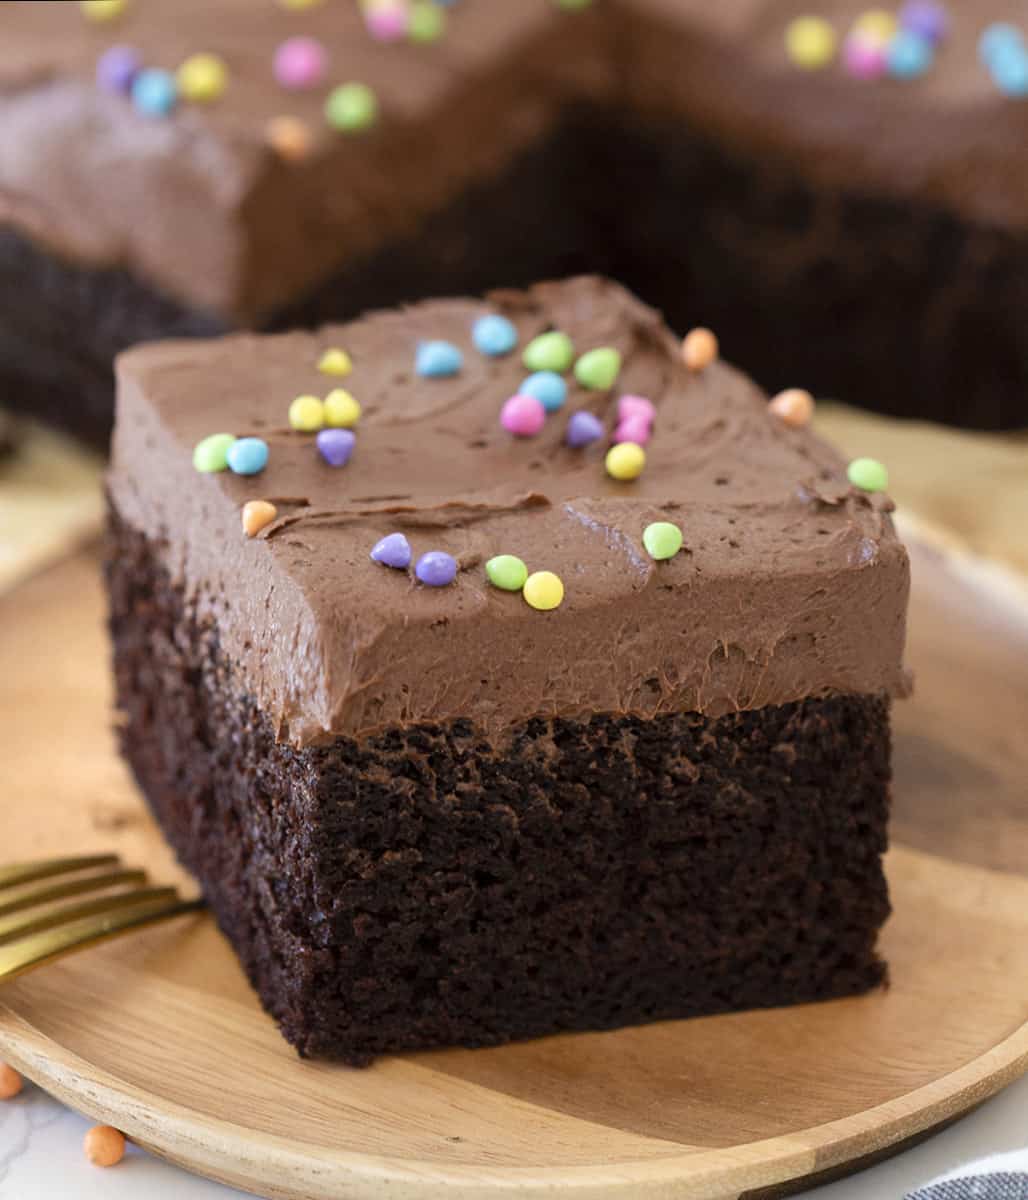 https://preppykitchen.com/wp-content/uploads/2019/04/chocolate-sheetcake-recipe-1200-a.jpg